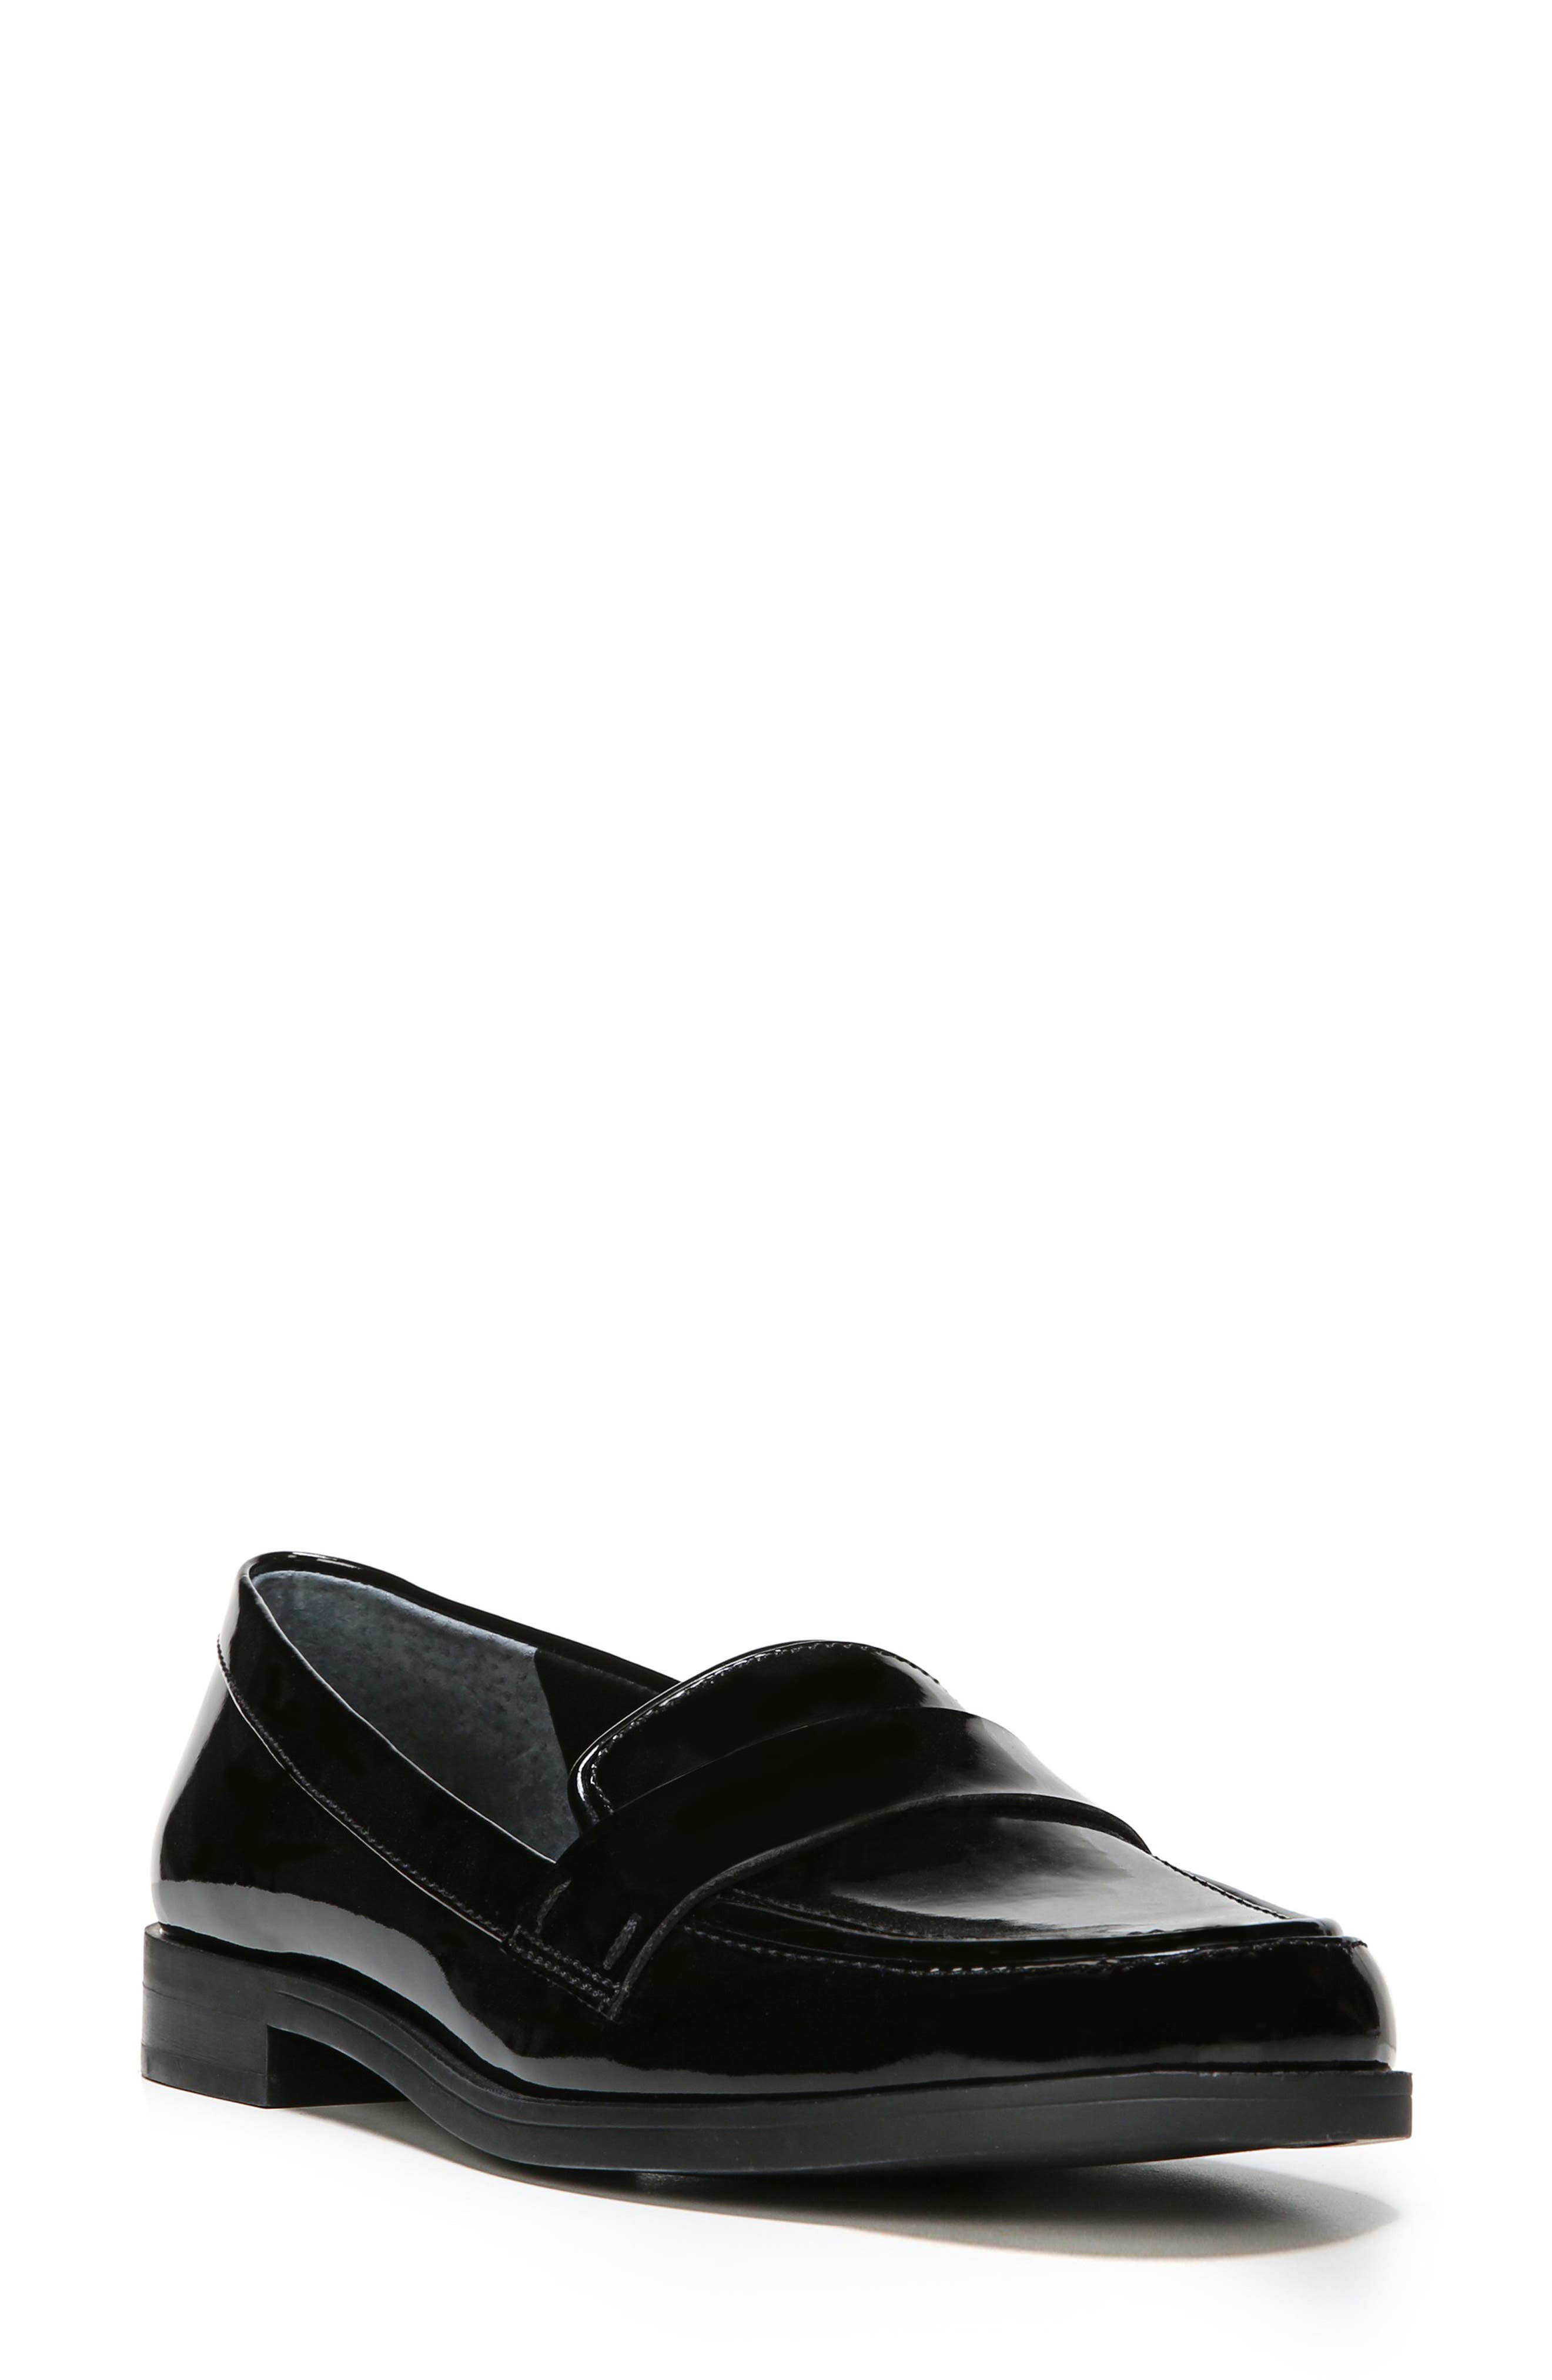 UPC 093638671599 product image for Women's Franco Sarto Valera Loafer, Size 9.5 M - Black | upcitemdb.com